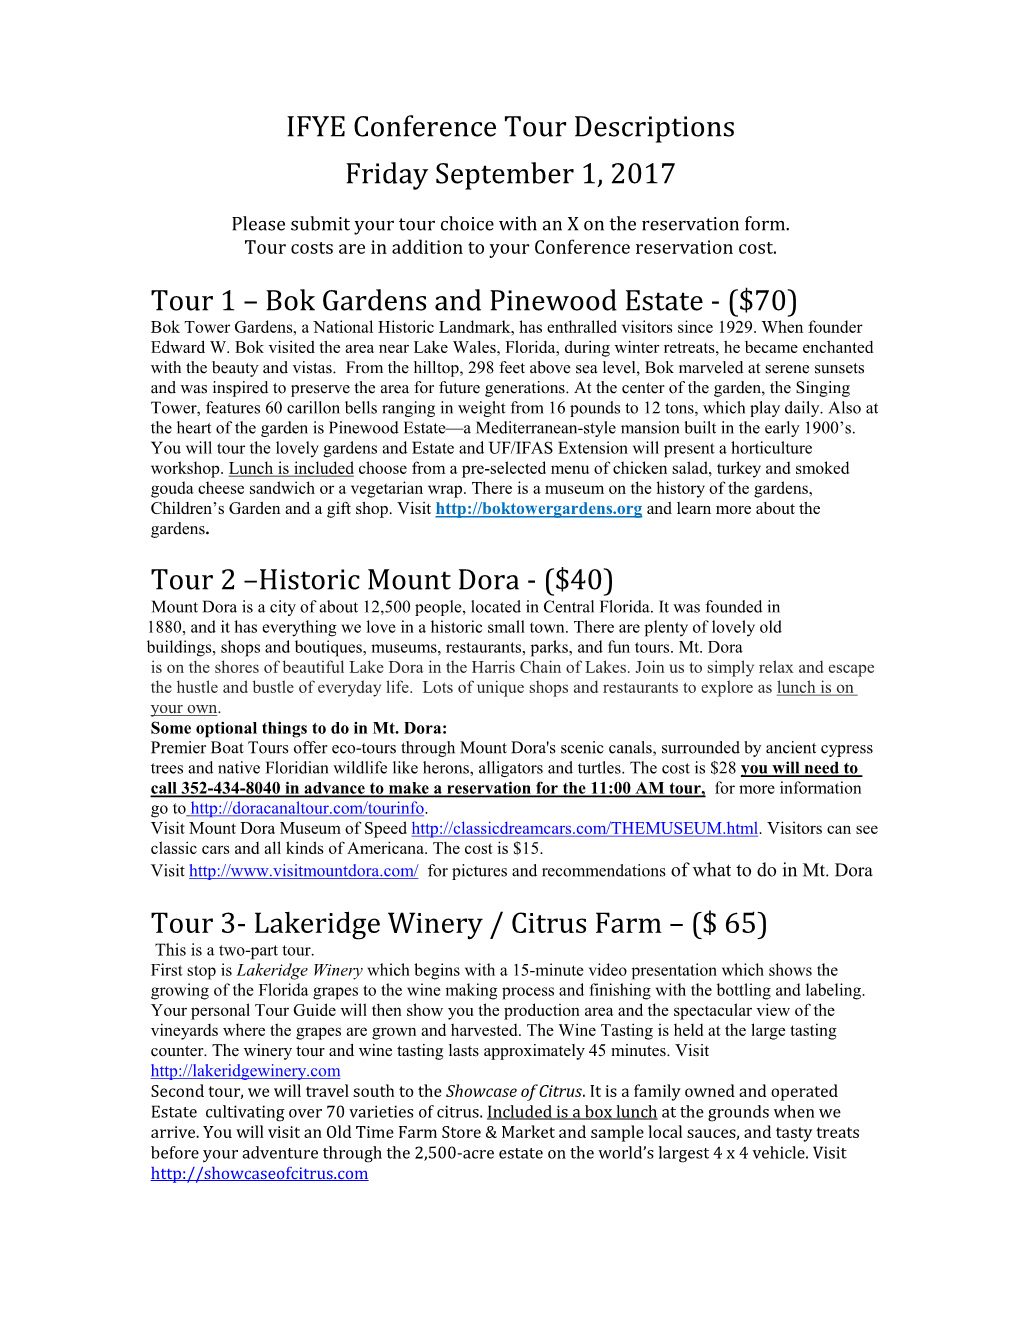 IFYE Conference Tour Descriptions Friday September 1, 2017 Tour